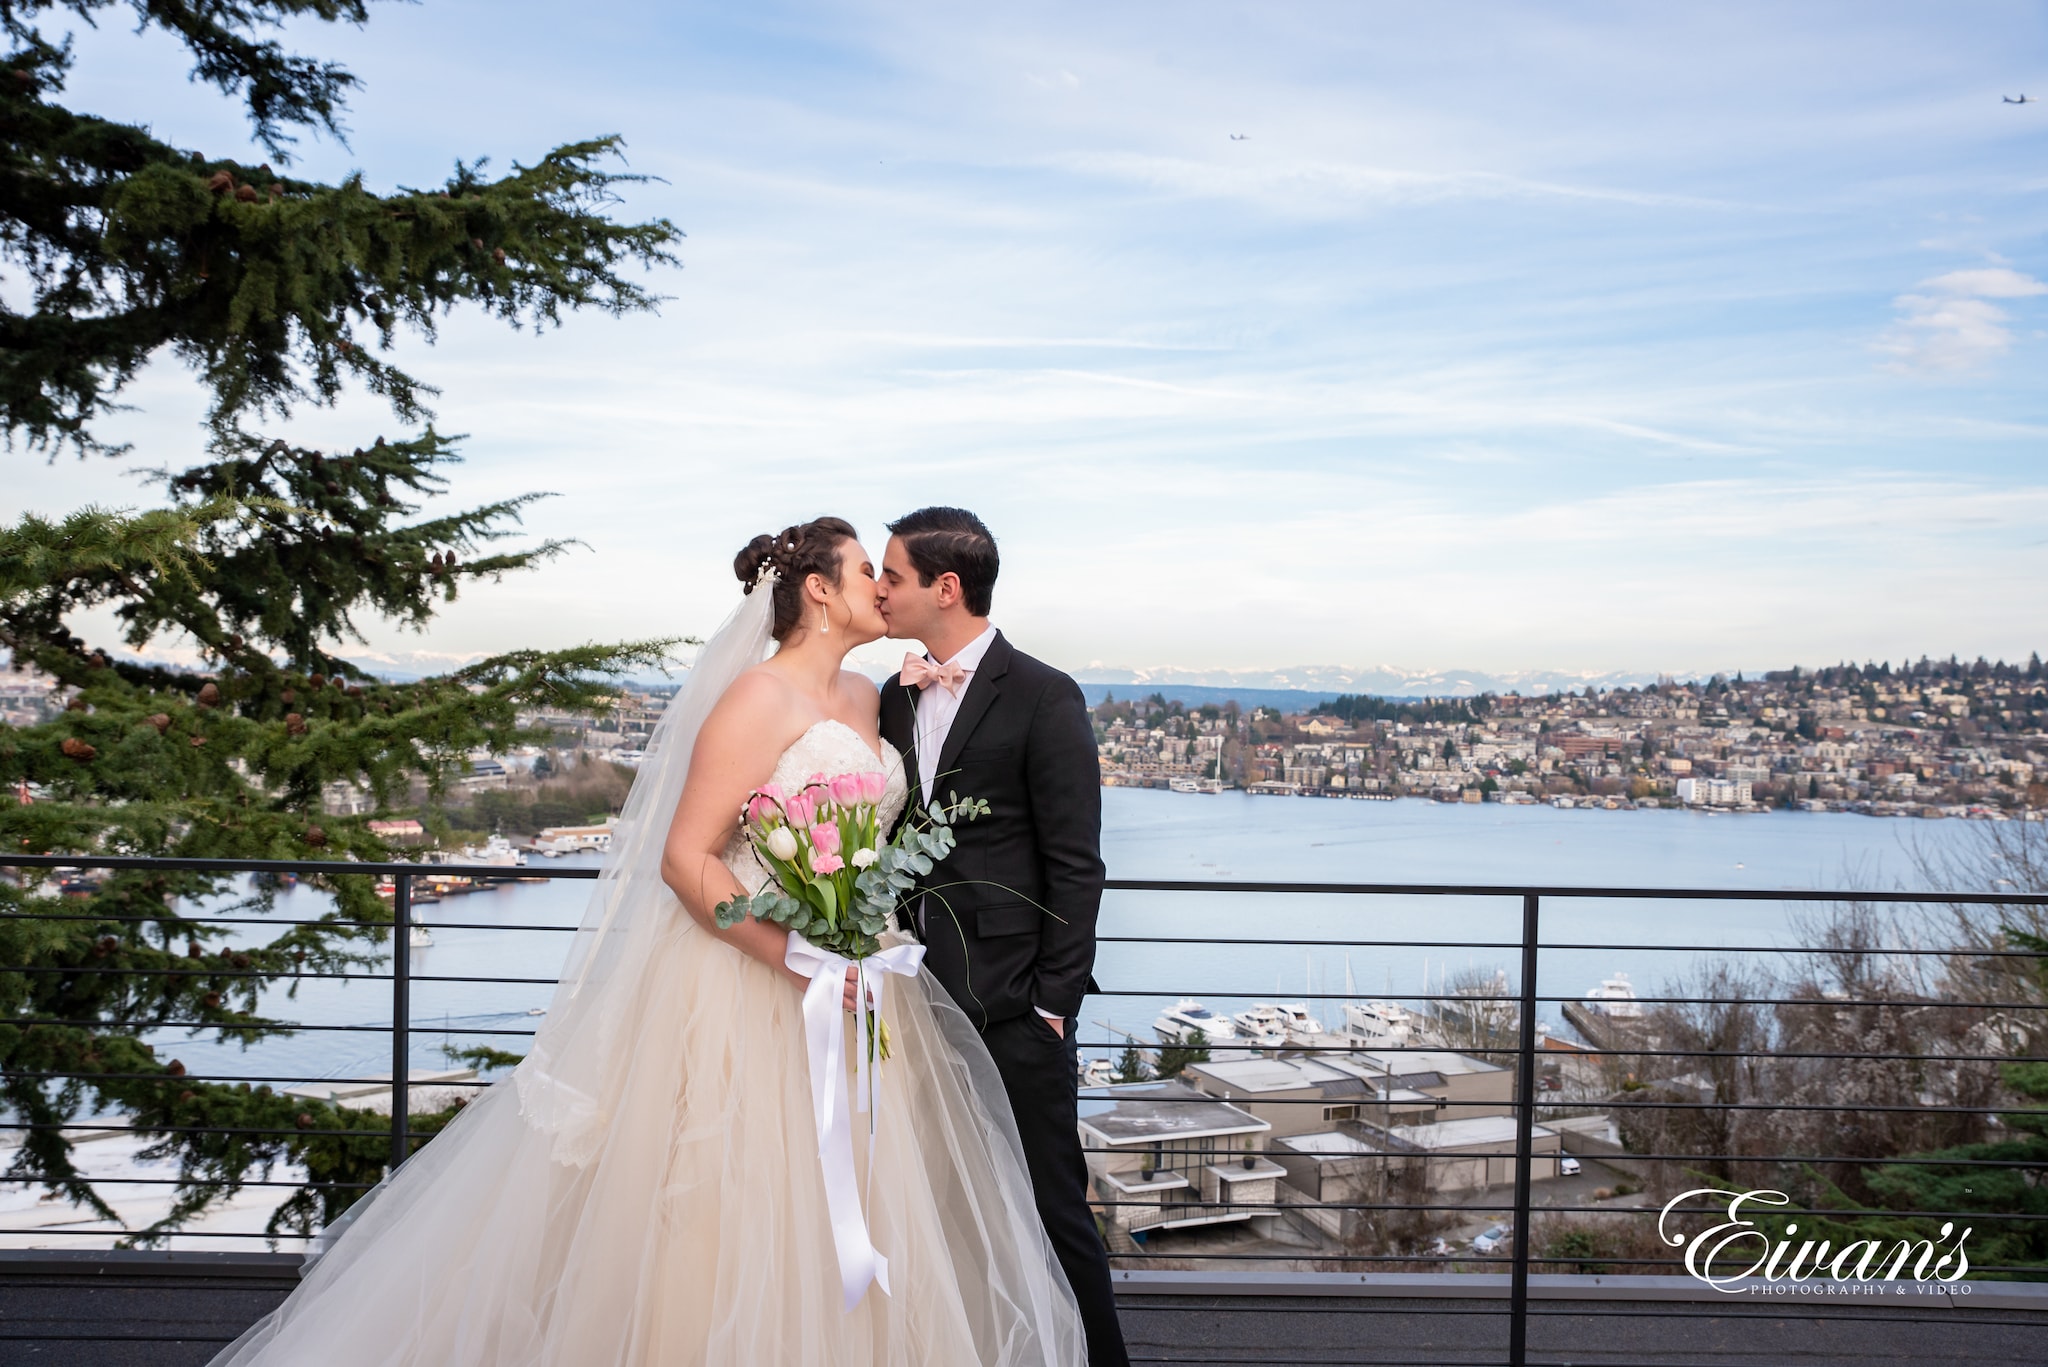 man and woman in wedding dress kissing on bridge during daytime